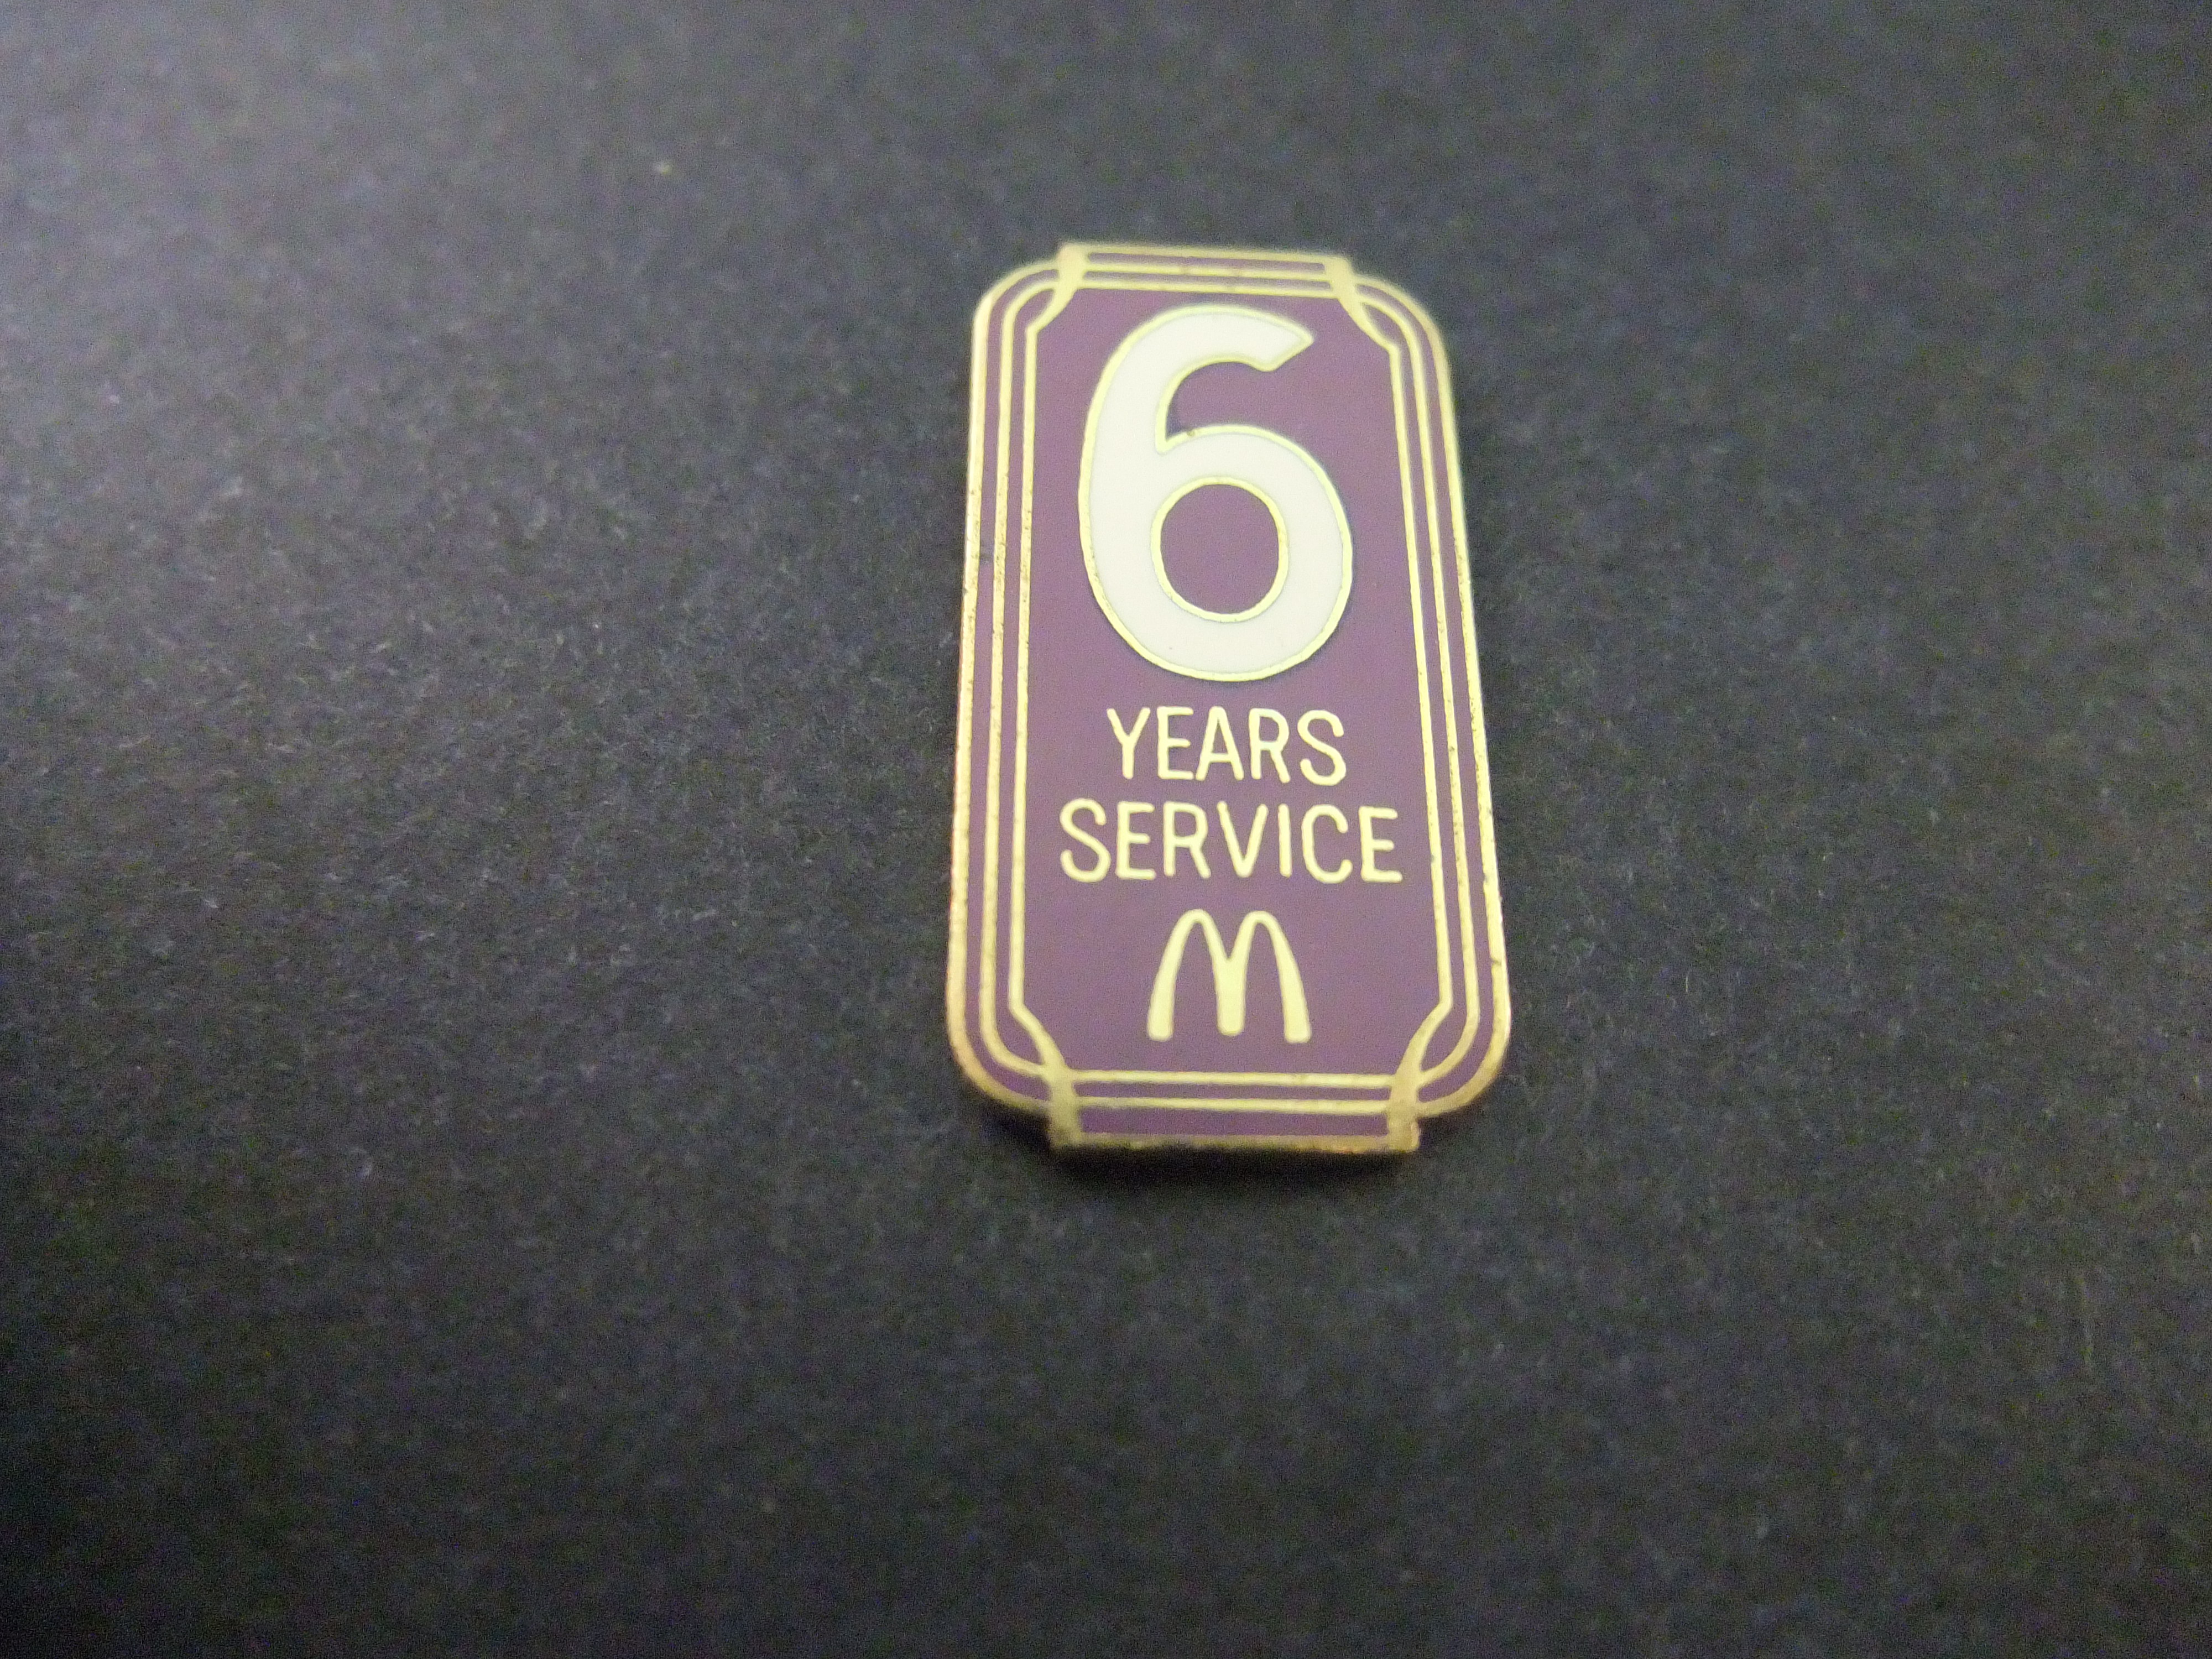 McDonald's 6 Years service